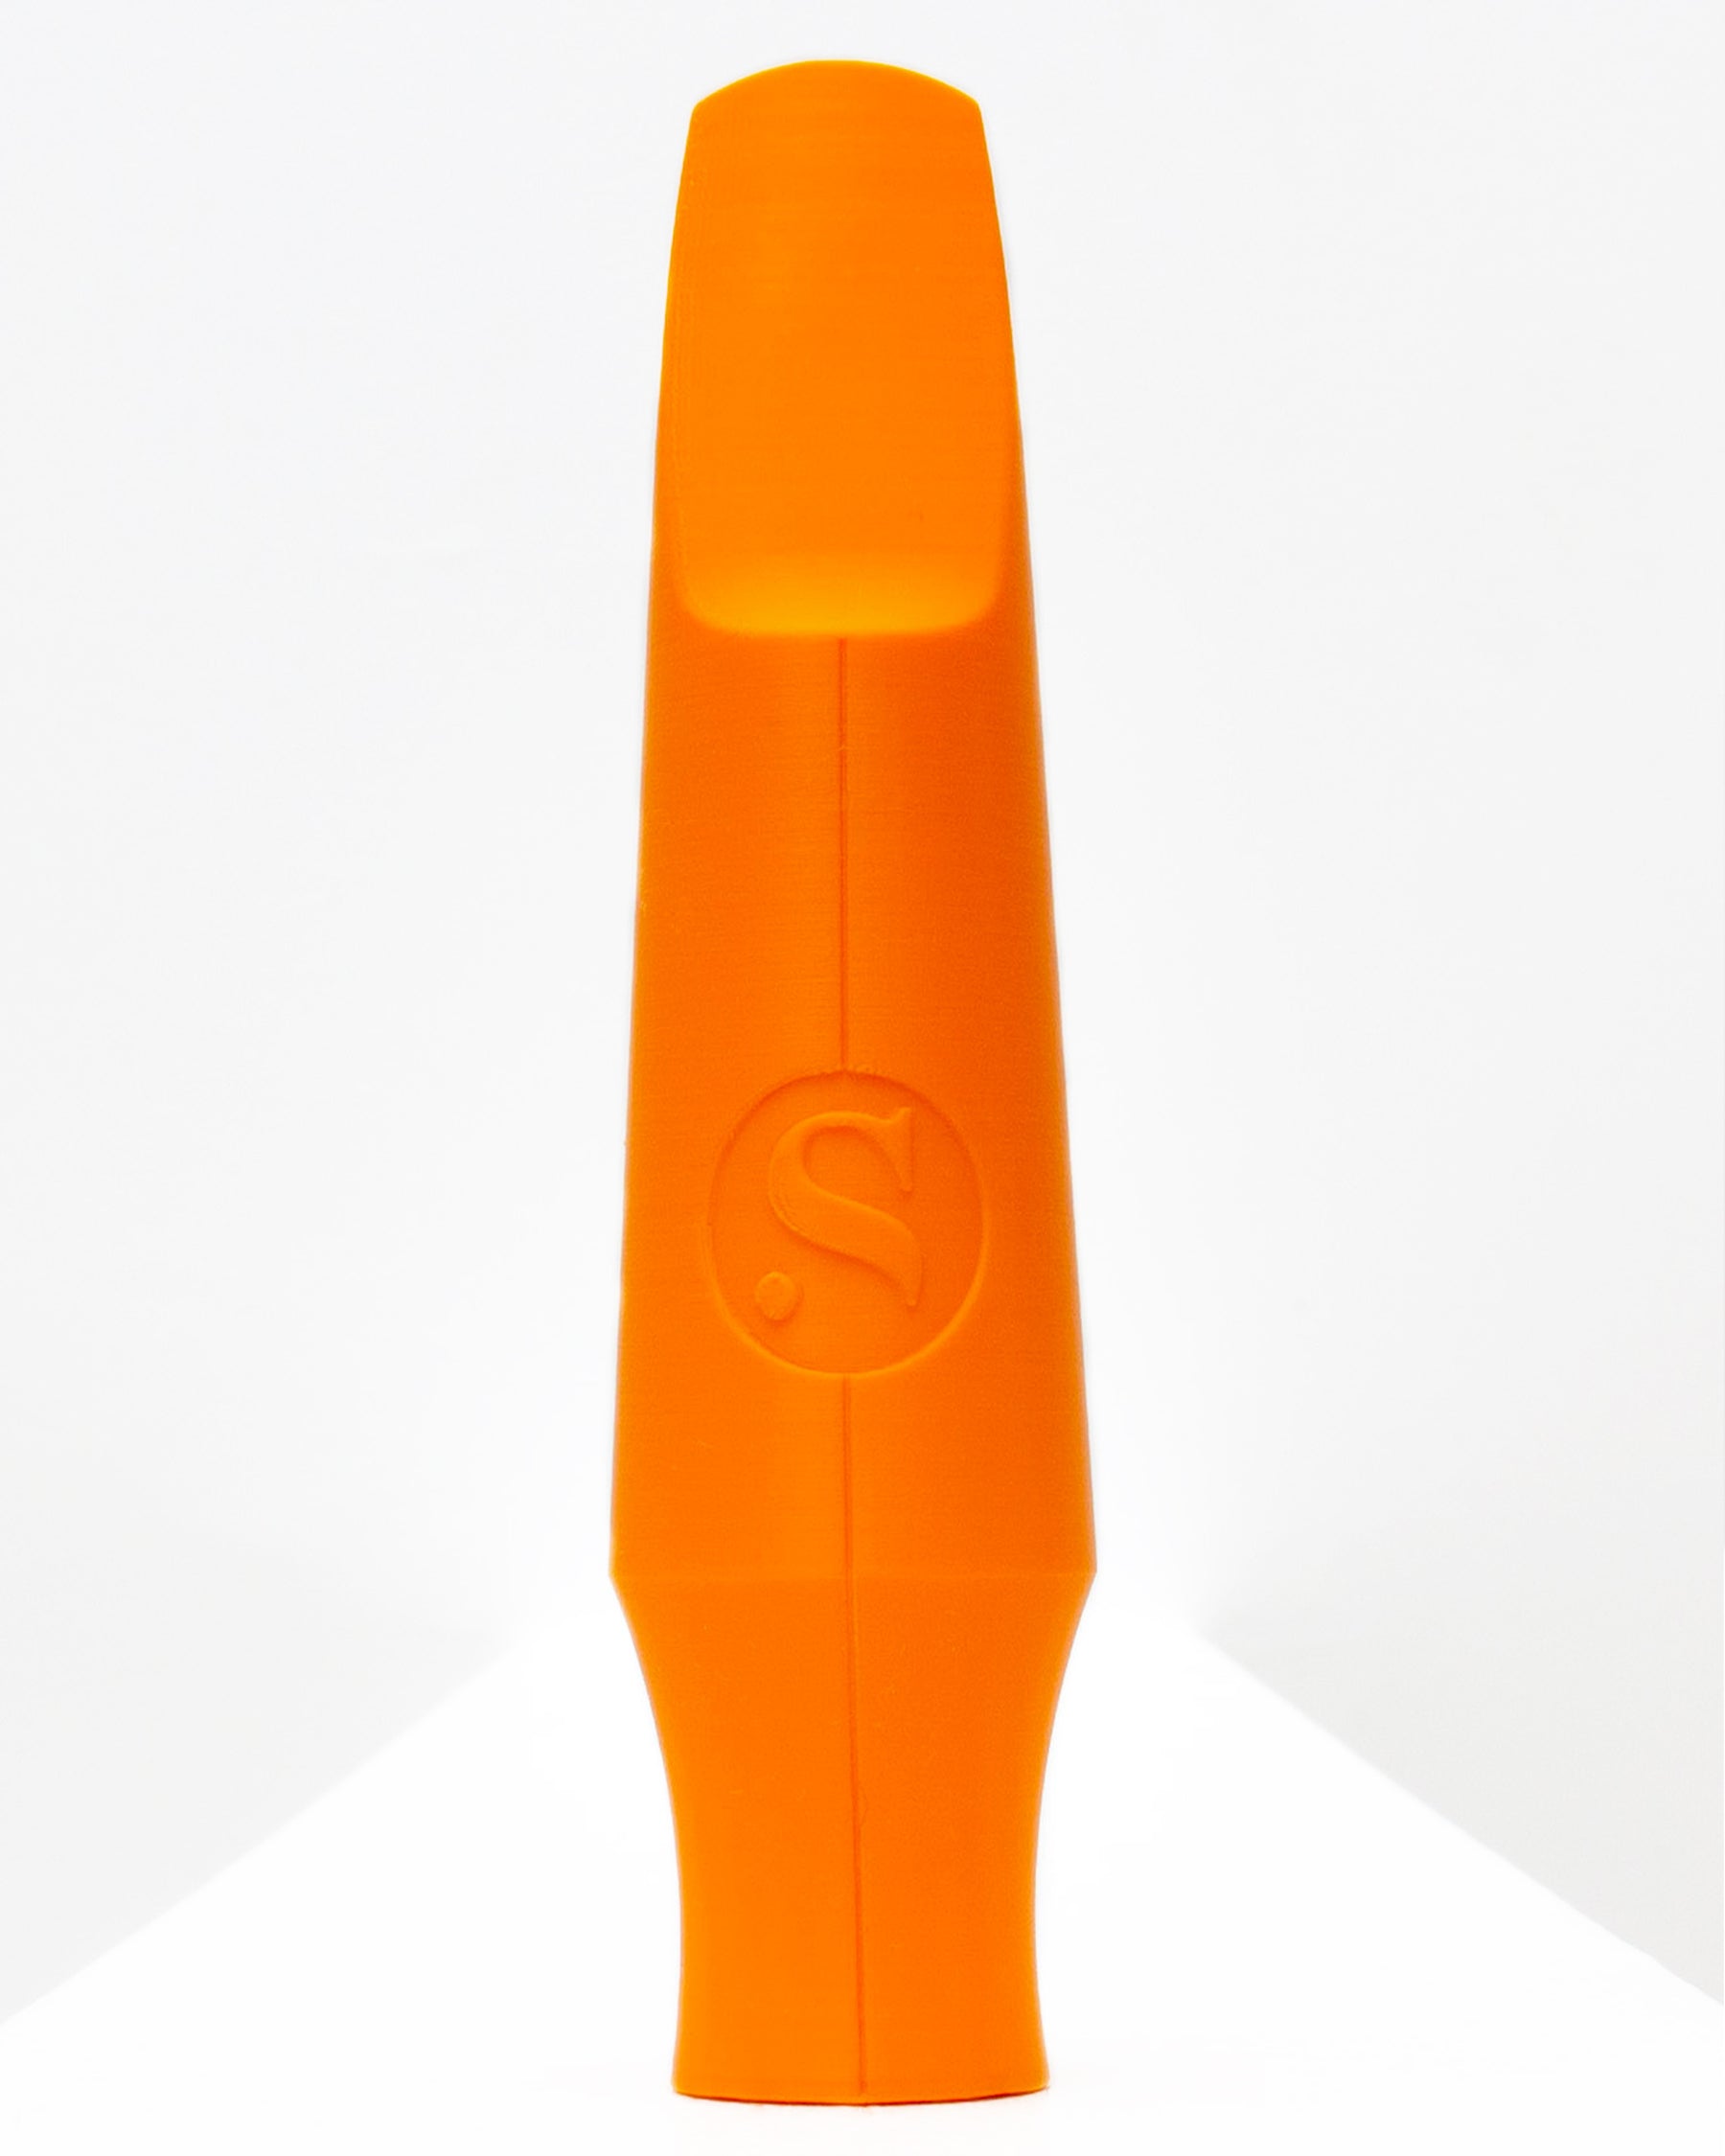 Baritone Originals Saxophone mouthpiece - Steady by Syos - 8 / Lava Orange